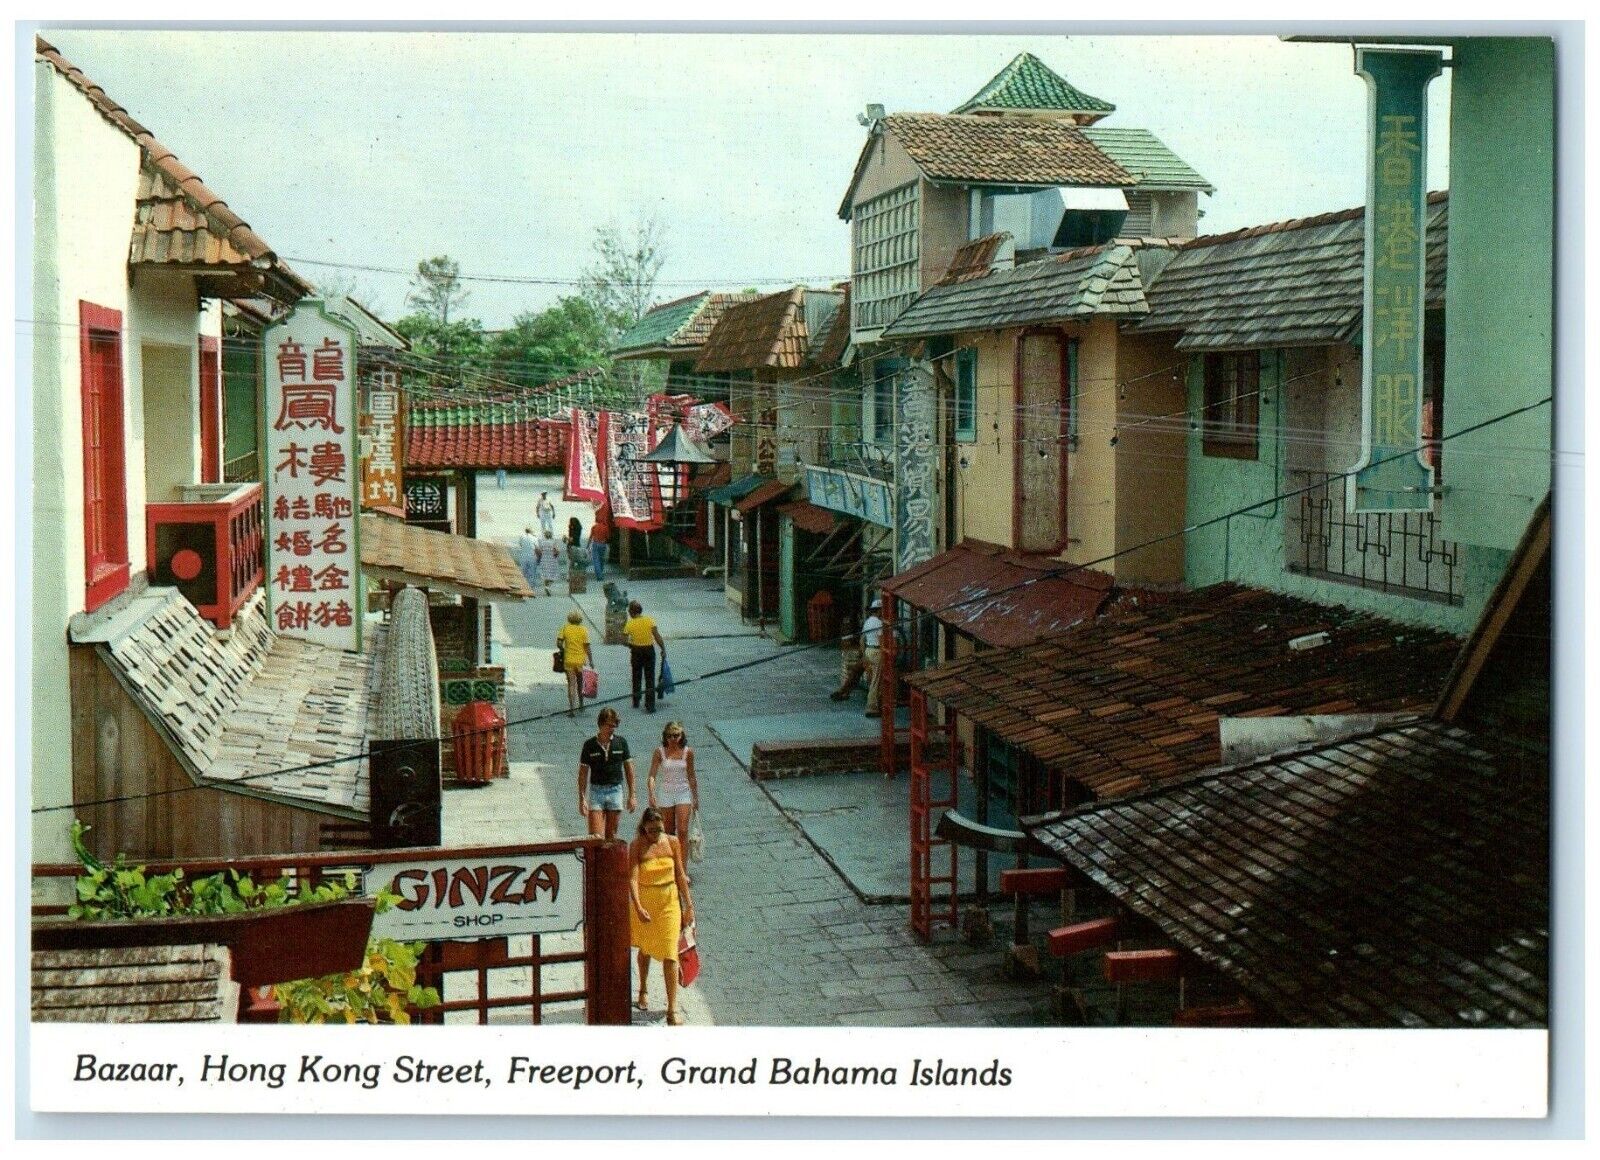 c1960's Hong Kong Street Freeport Grand Bahama Islands Bazaar Postcard